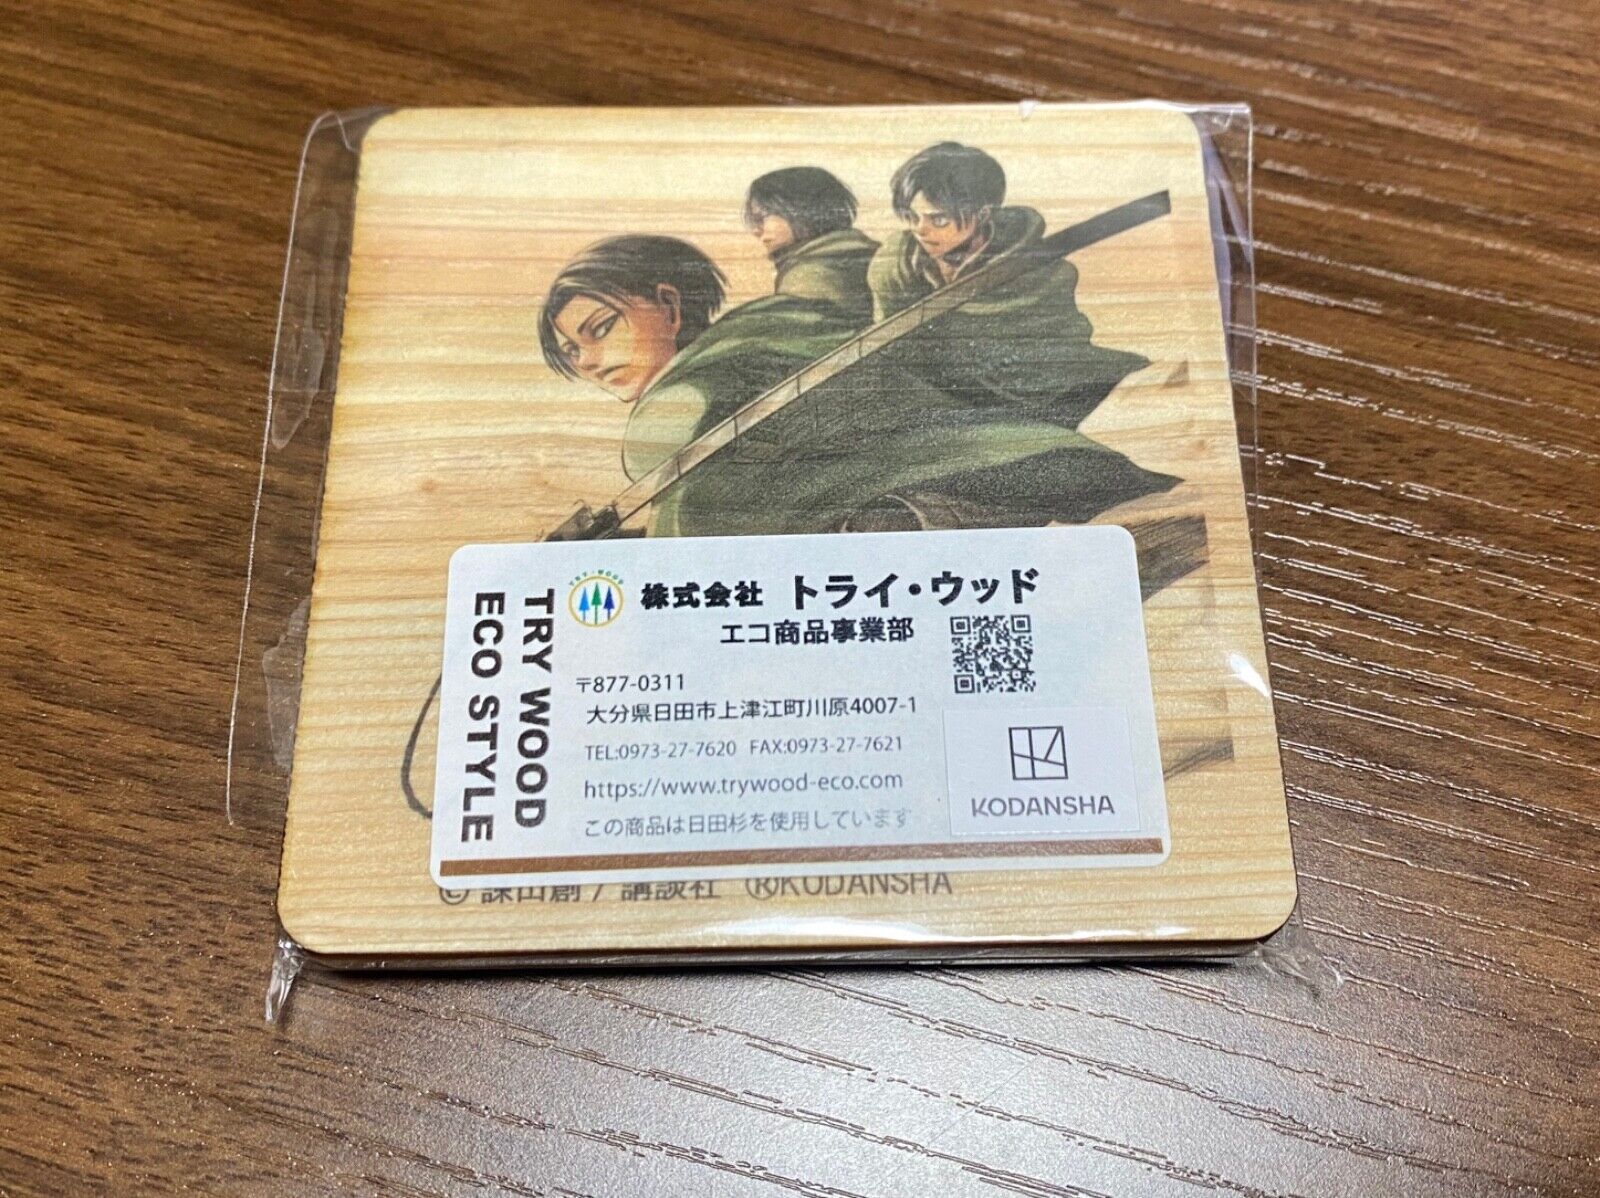 Attack On Titan(Shingeki no Kyojin) Eco Wood Coaster 2pcs/pack from Japan